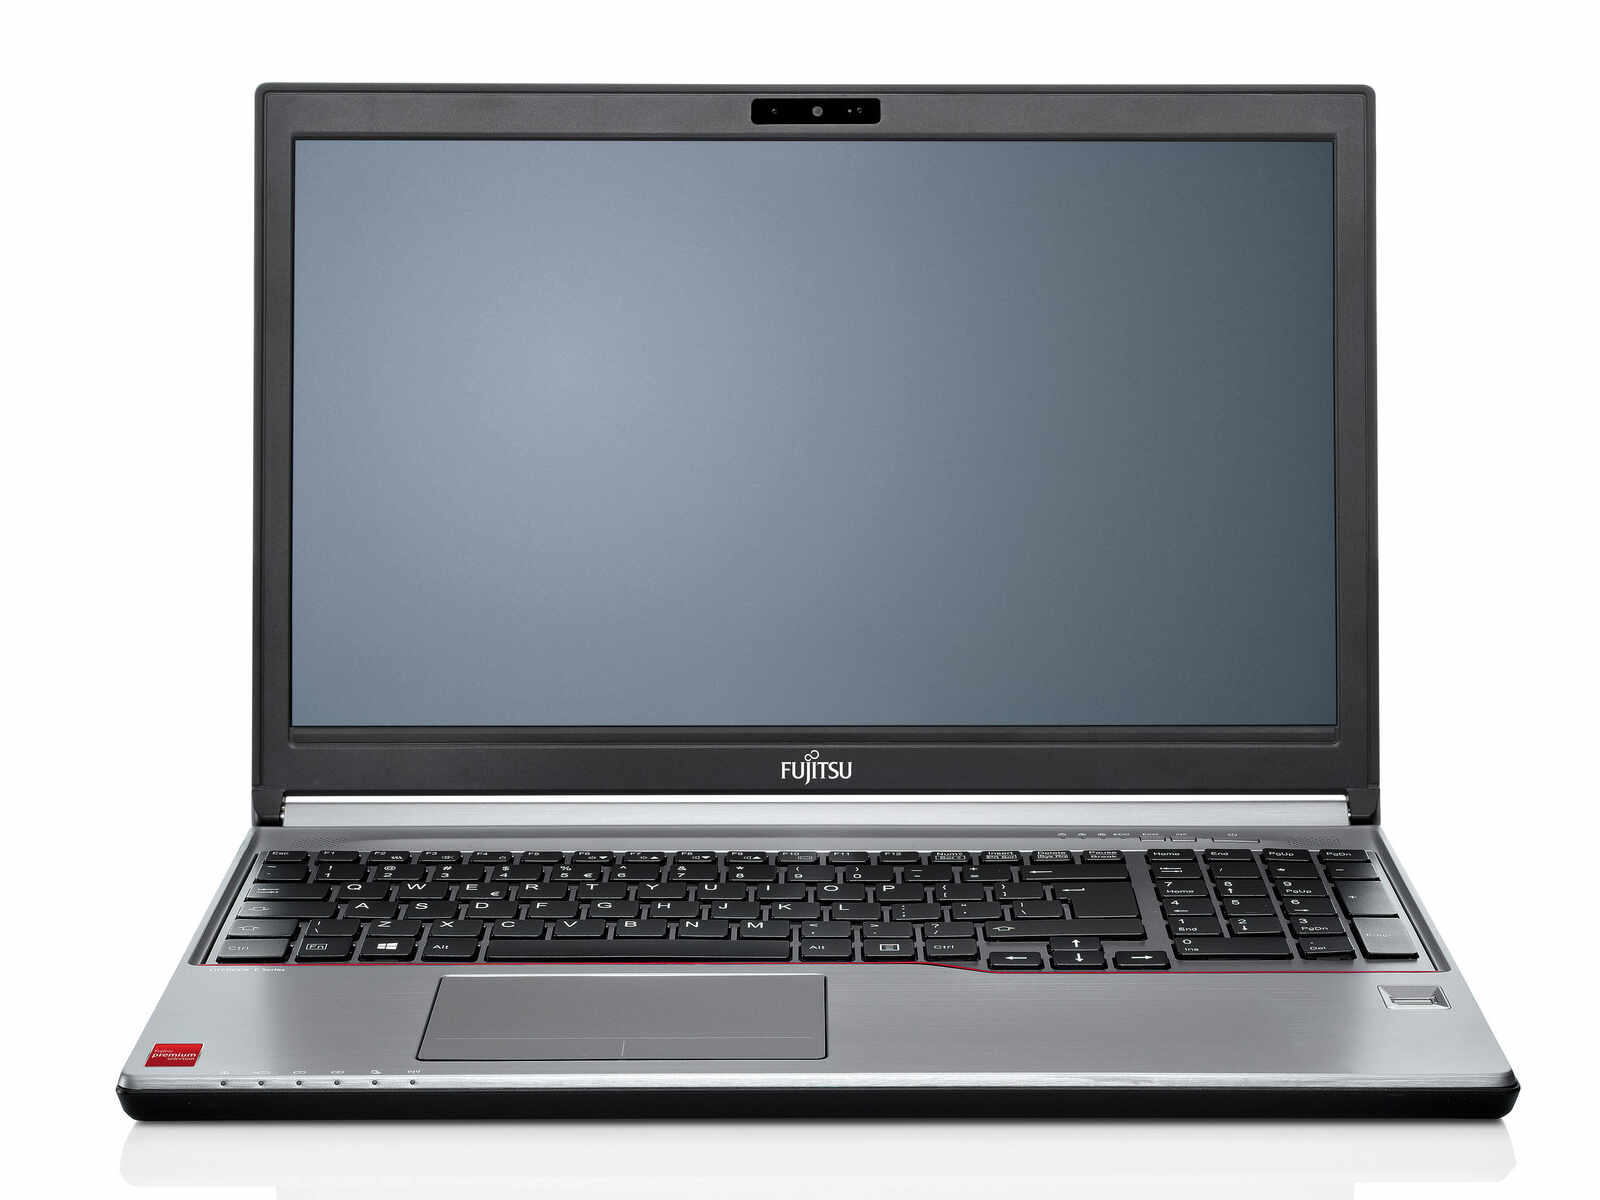 Laptop FUJITSU SIEMENS Lifebook E754, Intel Core i5-4200M 2.50GHz, 4GB DDR3, 120GB SSD, DVD-RW, 15.6 Inch, Tastatura Numerica, Fara Webcam, Grad B